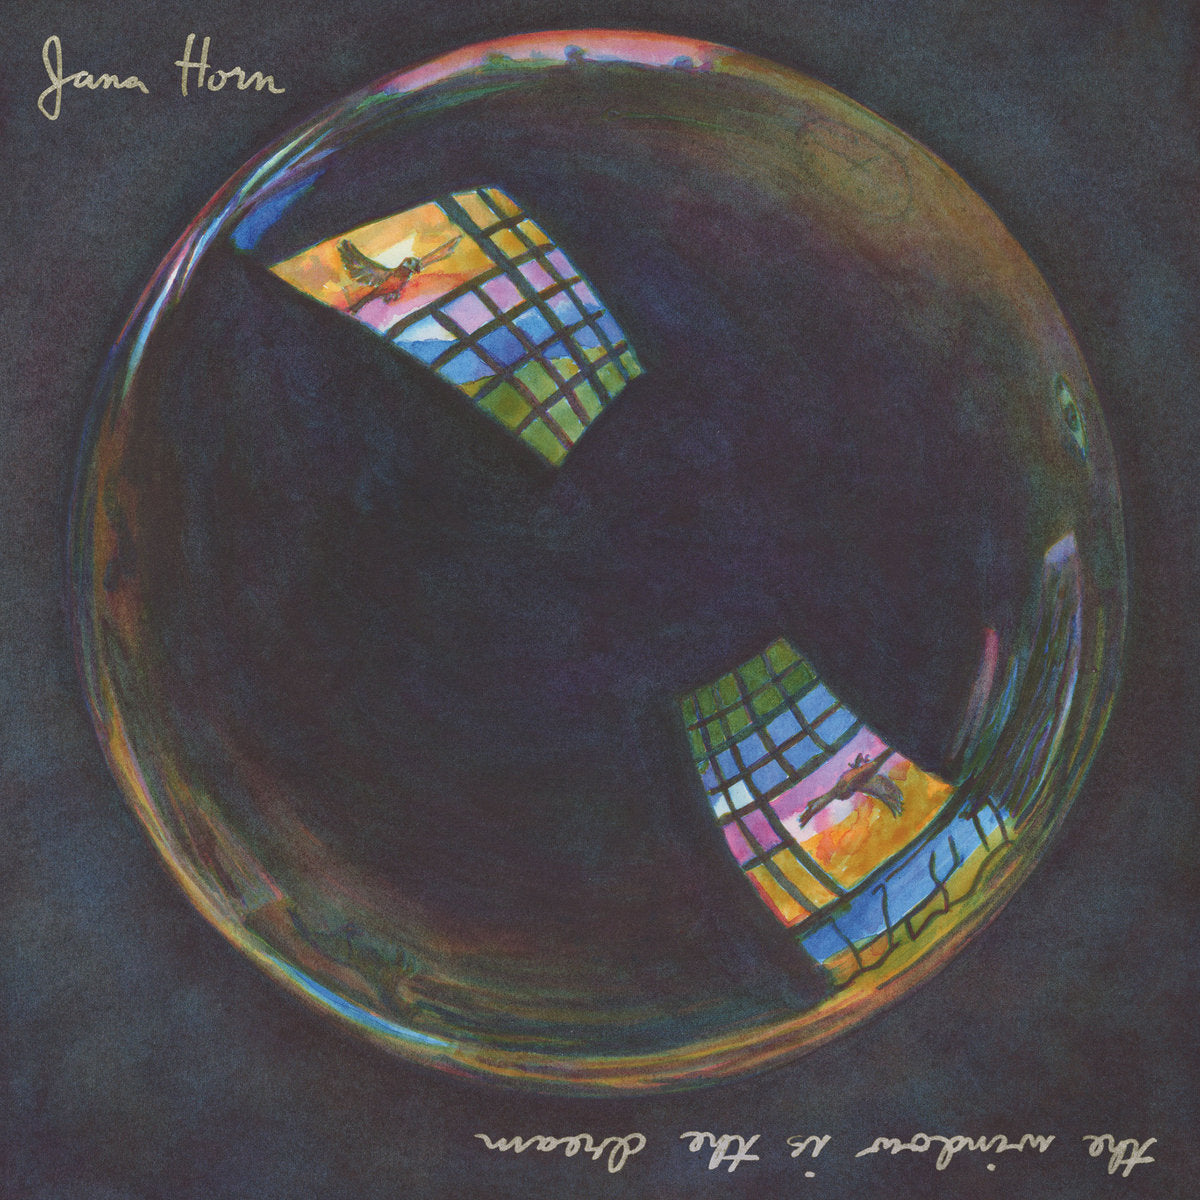 Jana Horn ~ The Window Is The Dream